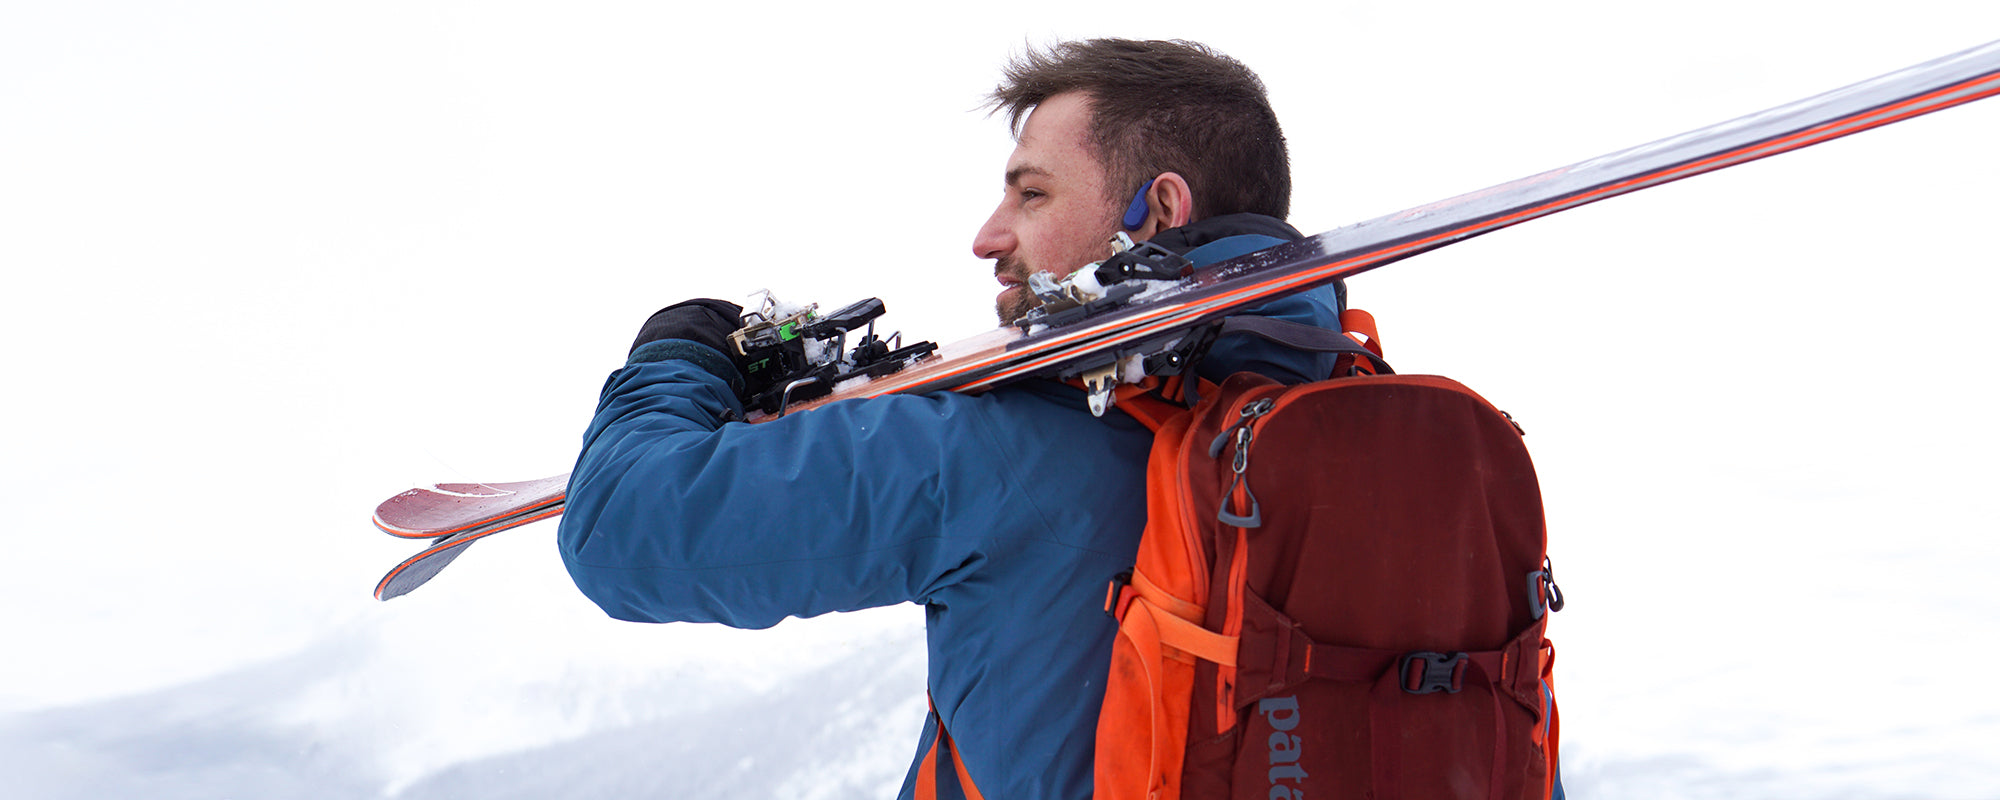 Man holding skiis on snowy mountain and wearing AfterShokz Aeropex headphones